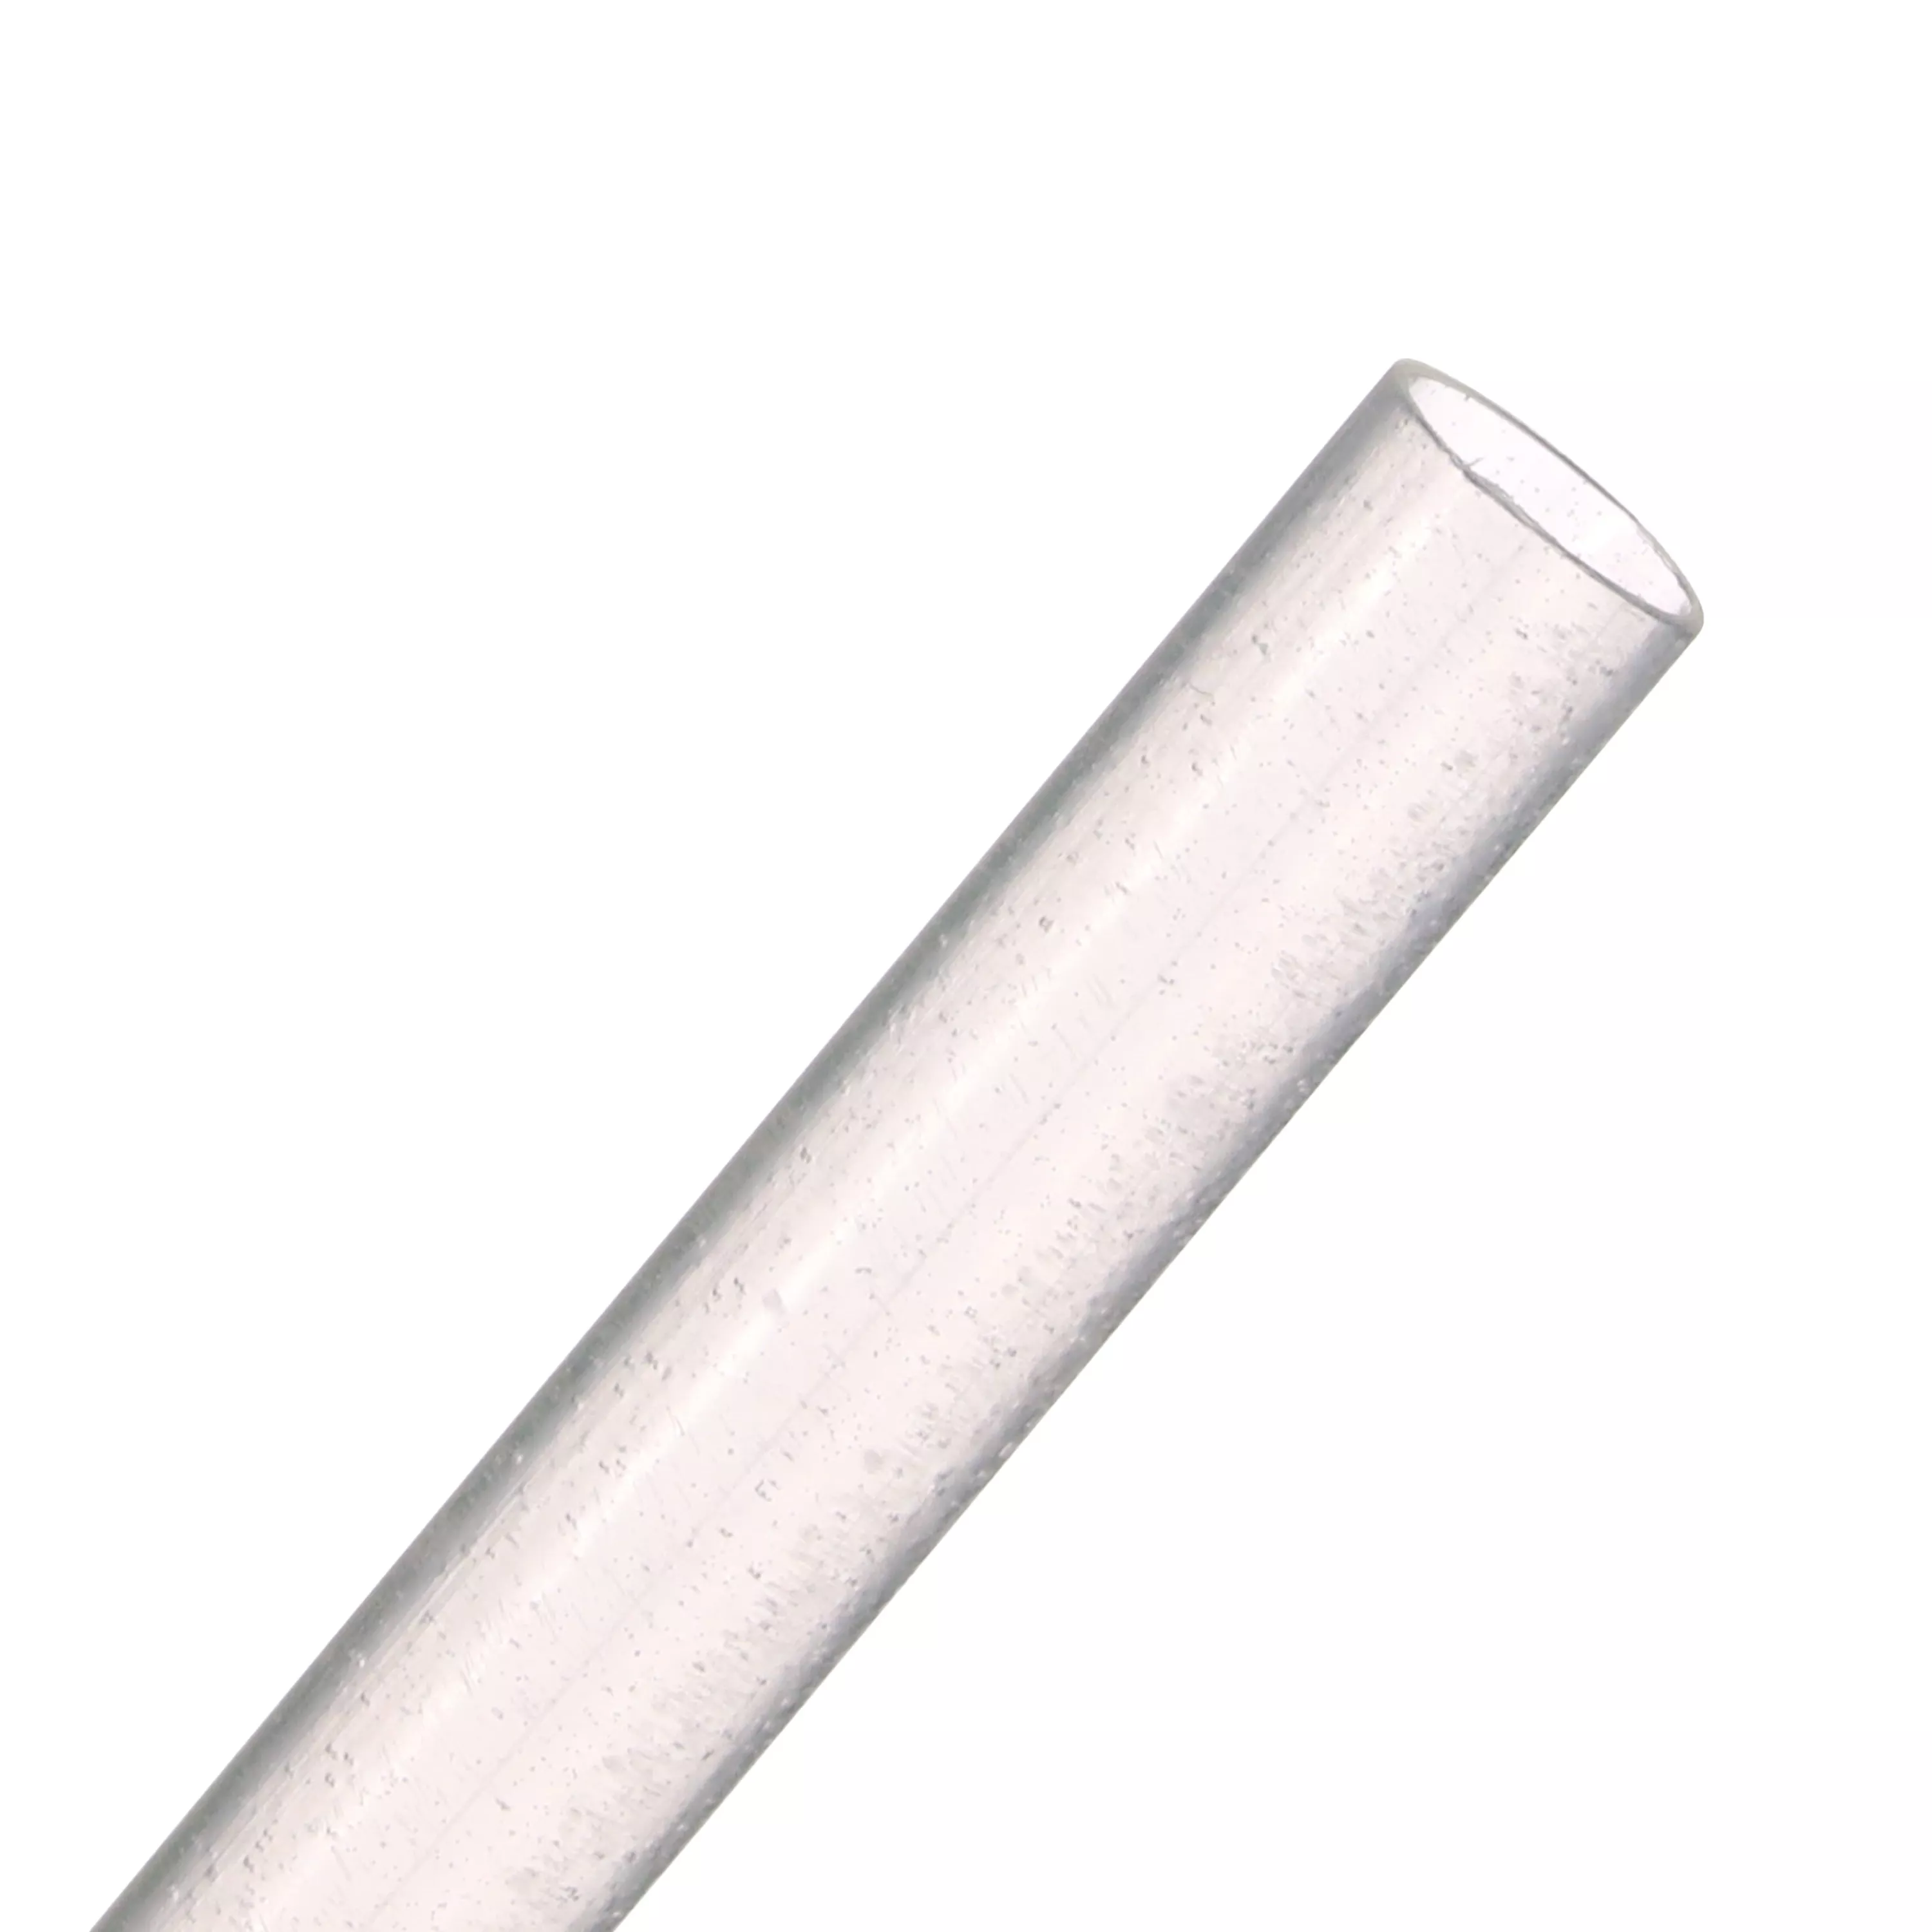 3M™ Thin-Wall Heat Shrink Tubing EPS-300, Adhesive-Lined,
1/4-48